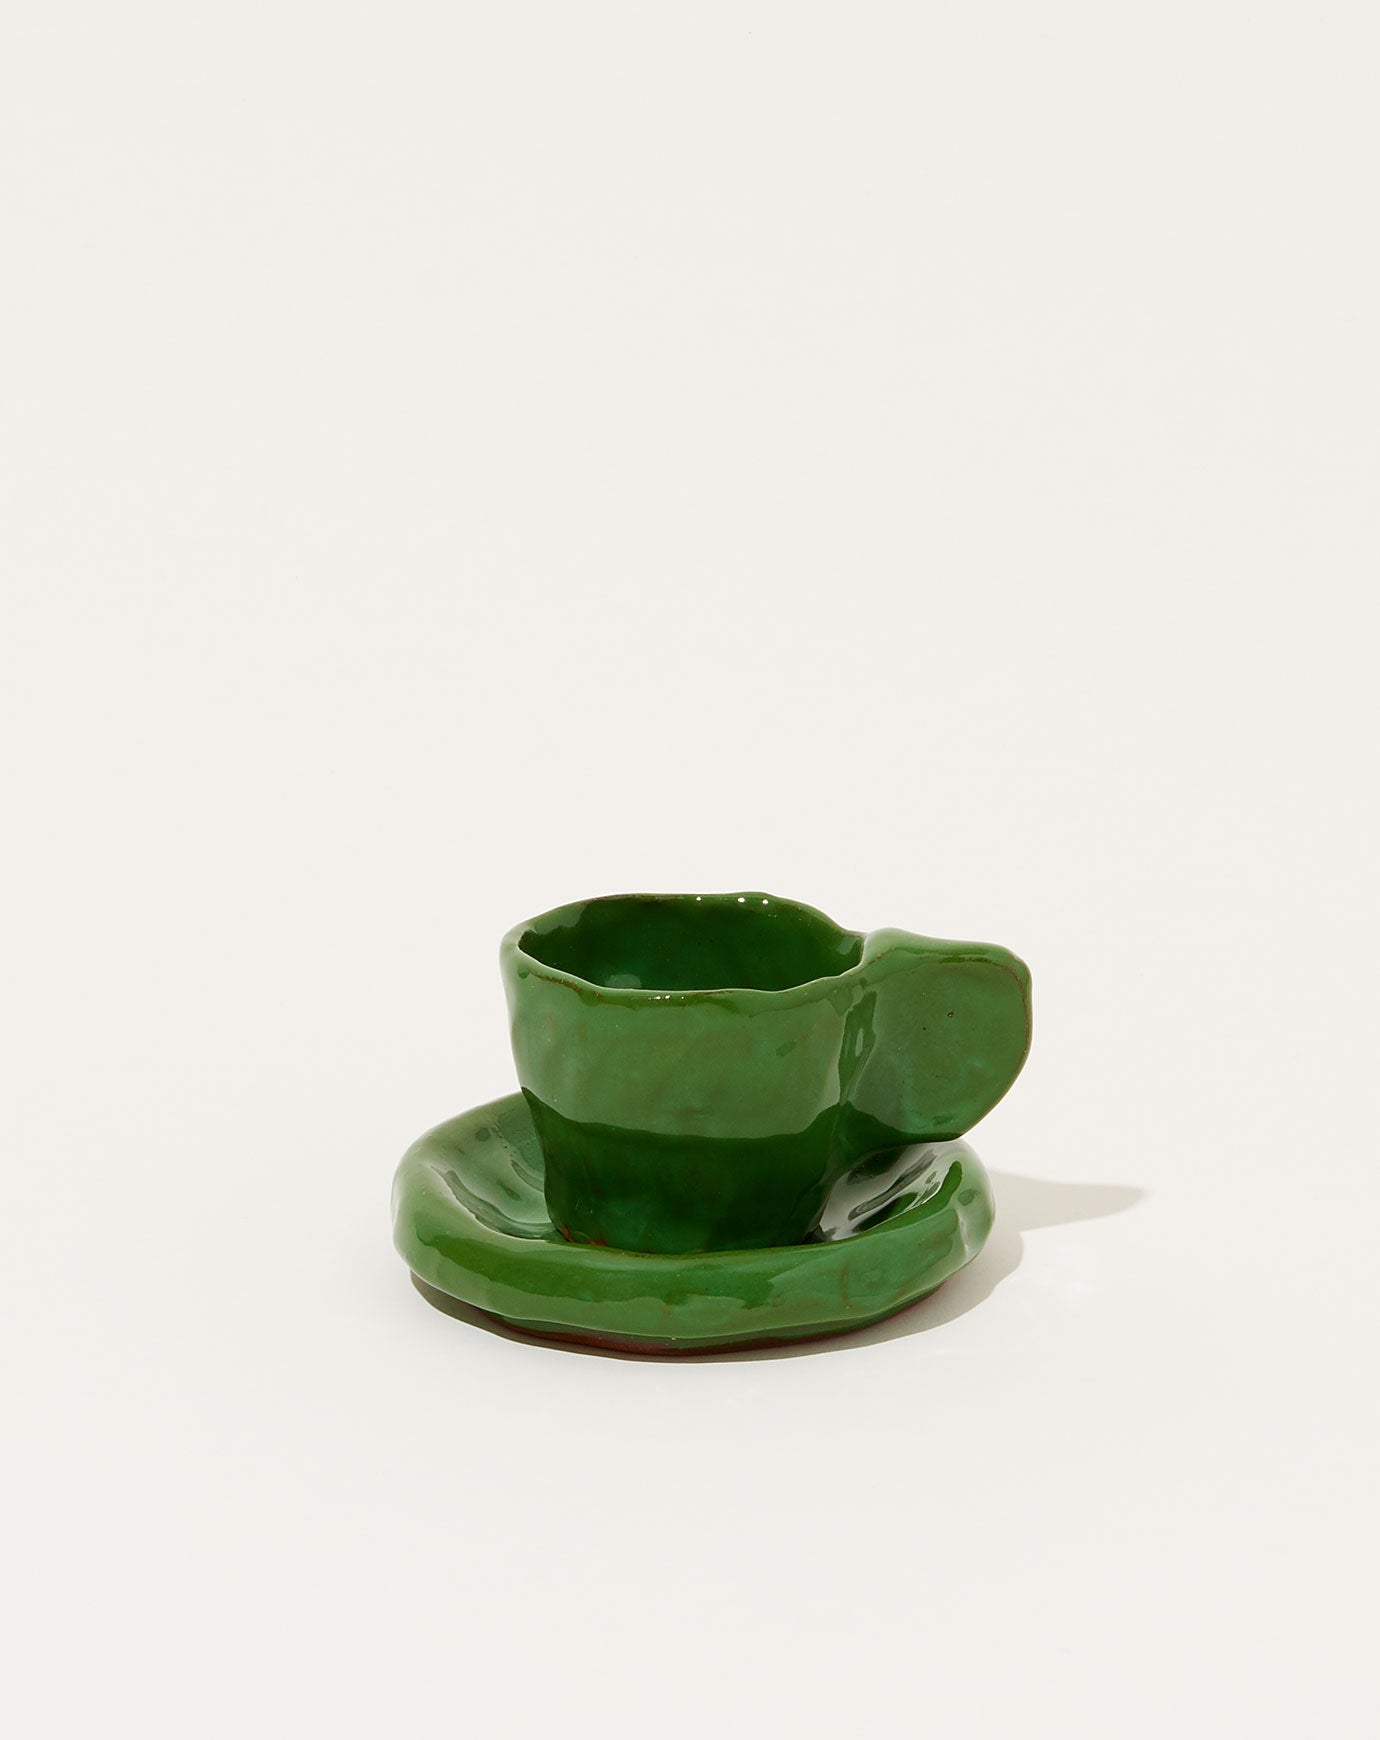 Sean Gerstley Espresso Set in Froggy Green